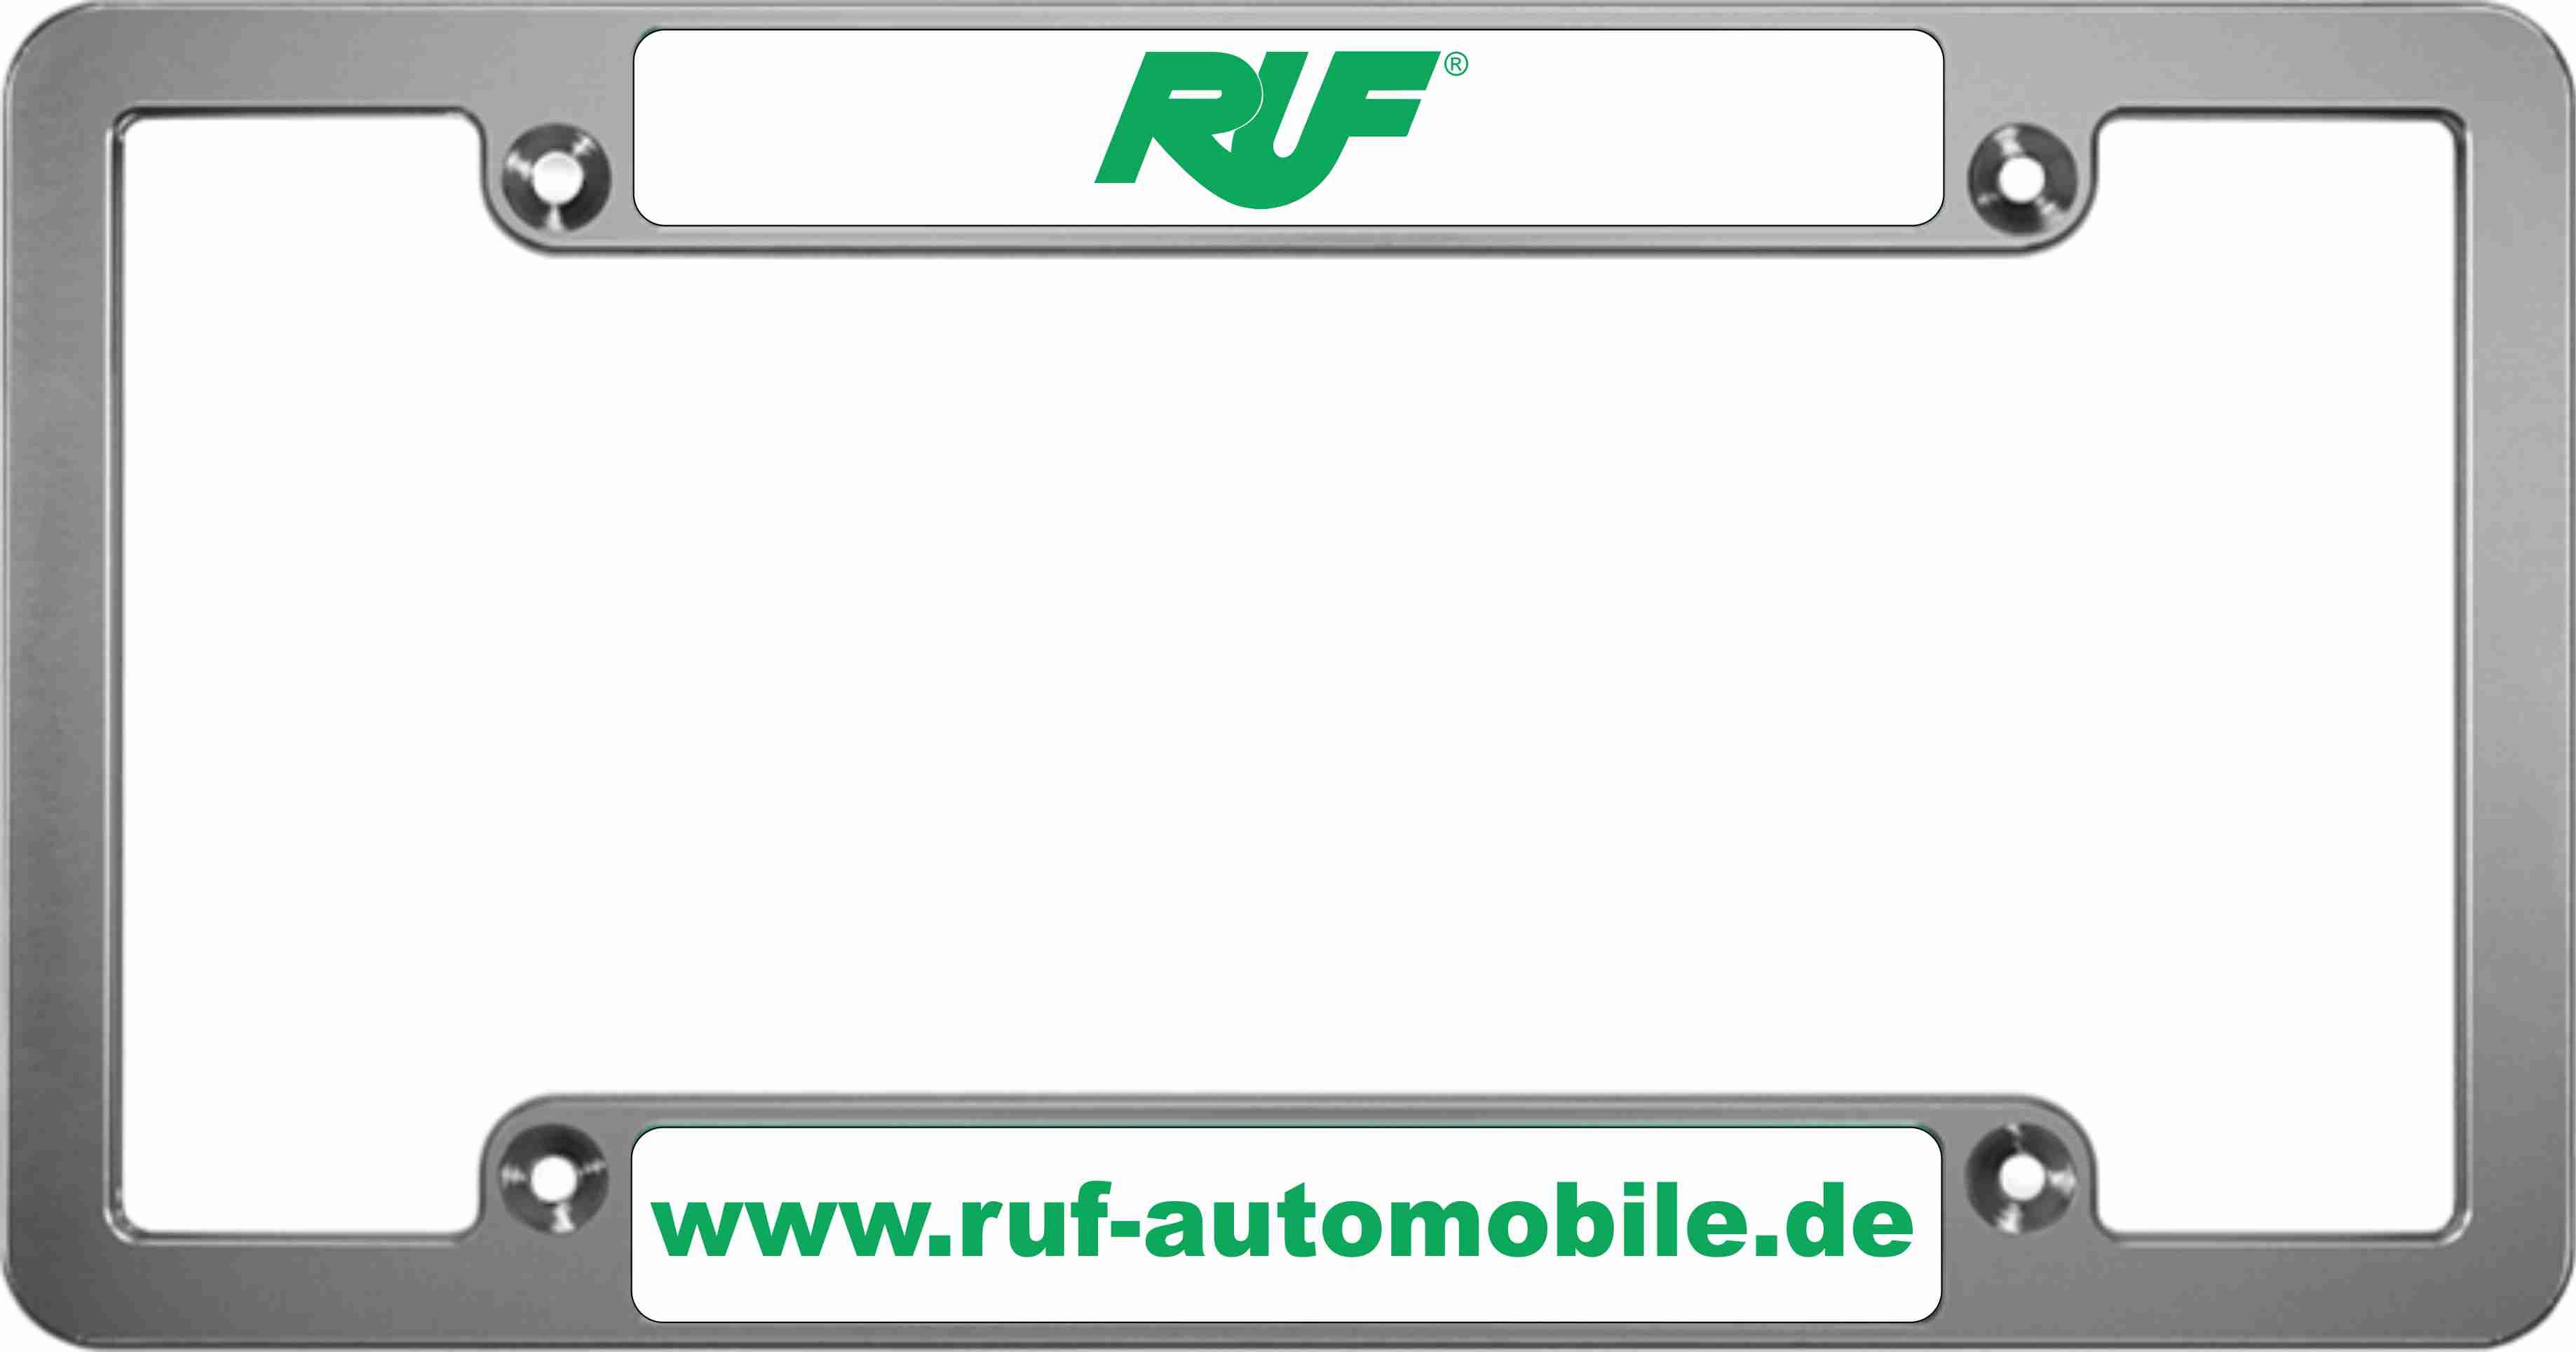 Ruf - custom CNC machined license plate frame